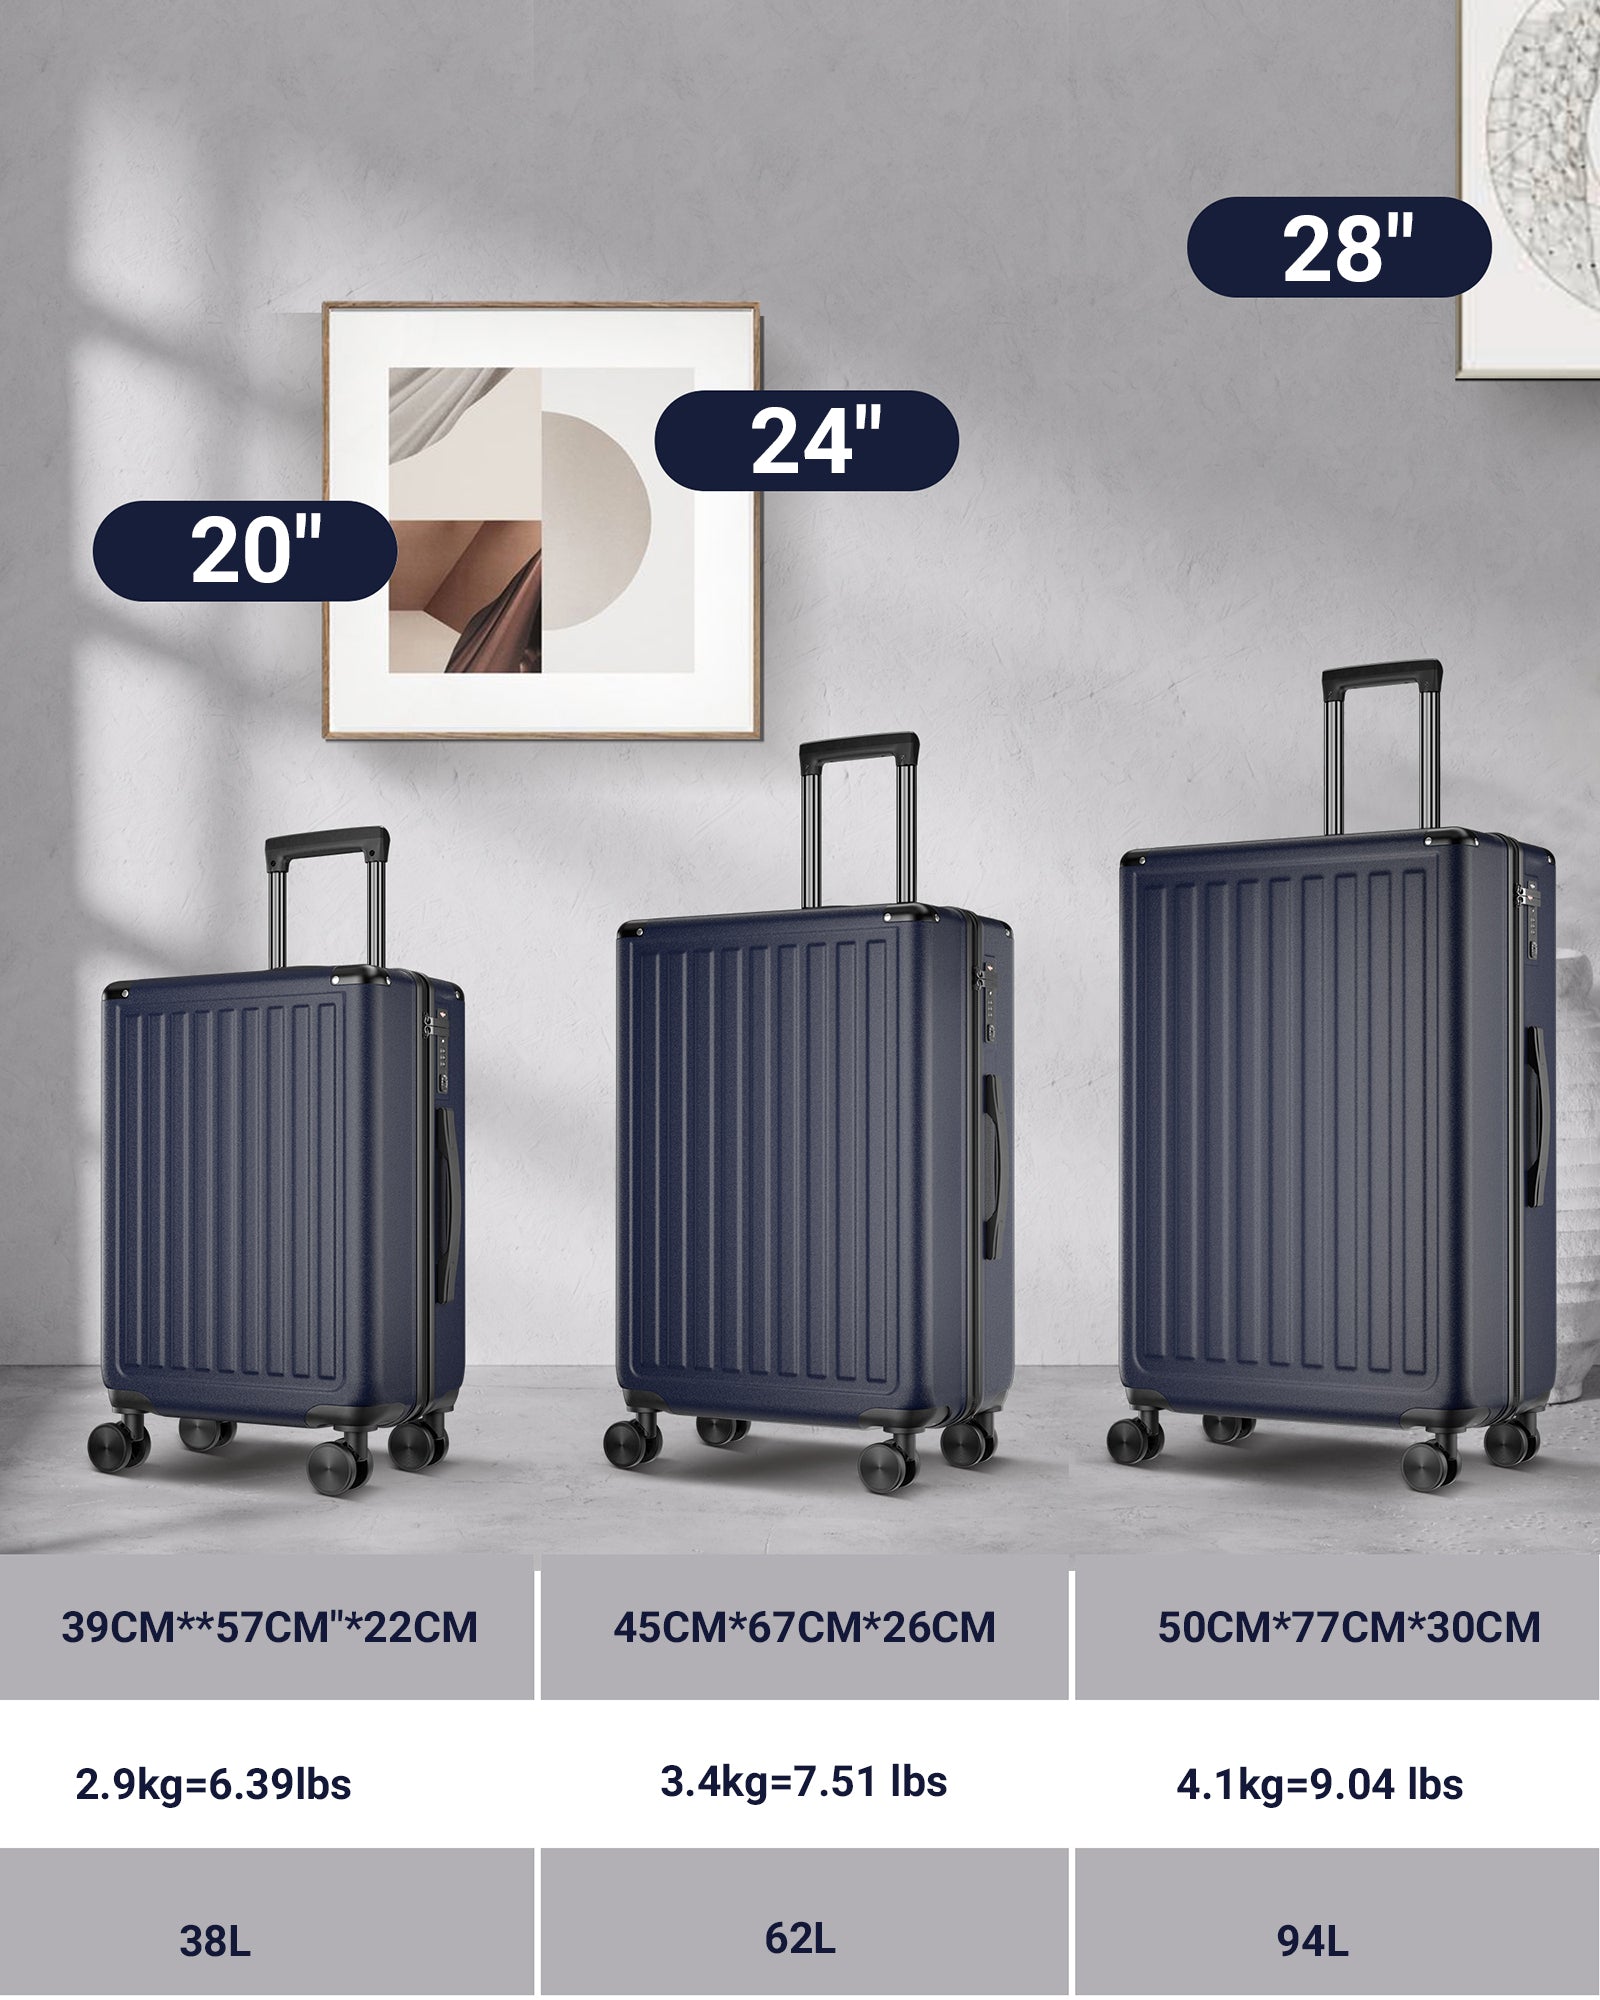 3 Piece Set Luggage With Tsa Lock&Spinner Wheels,